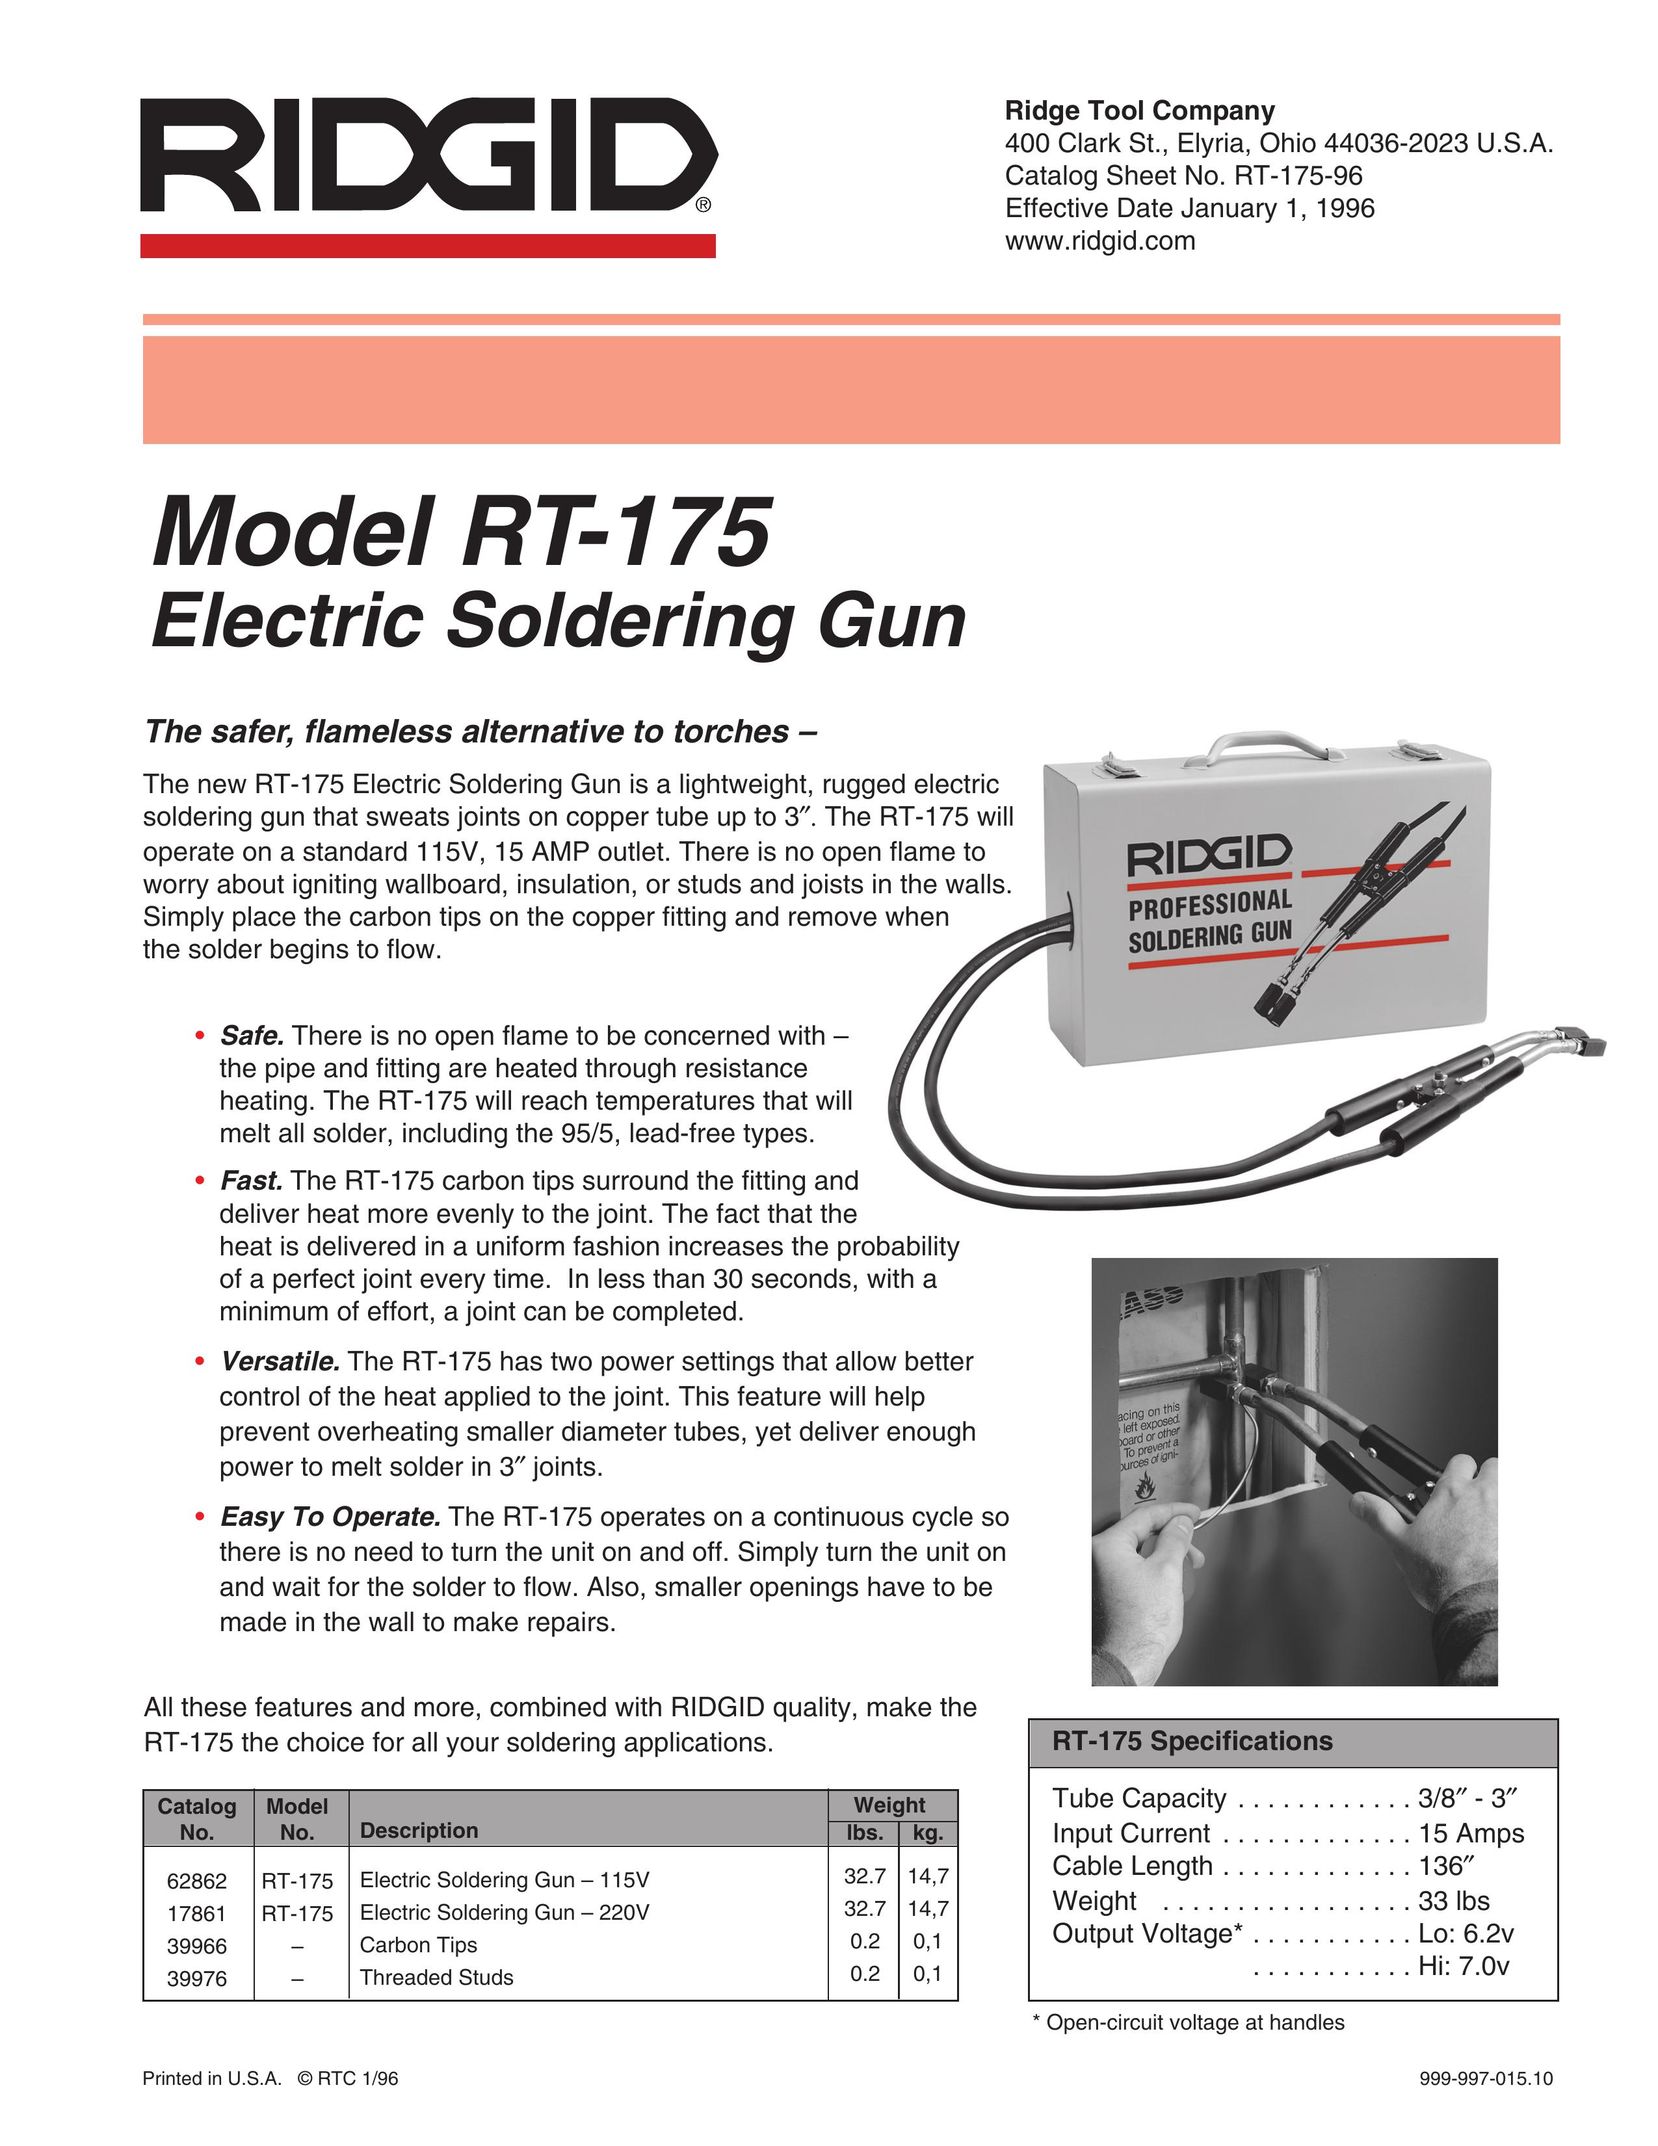 RIDGID RT-175 196 Soldering Gun User Manual